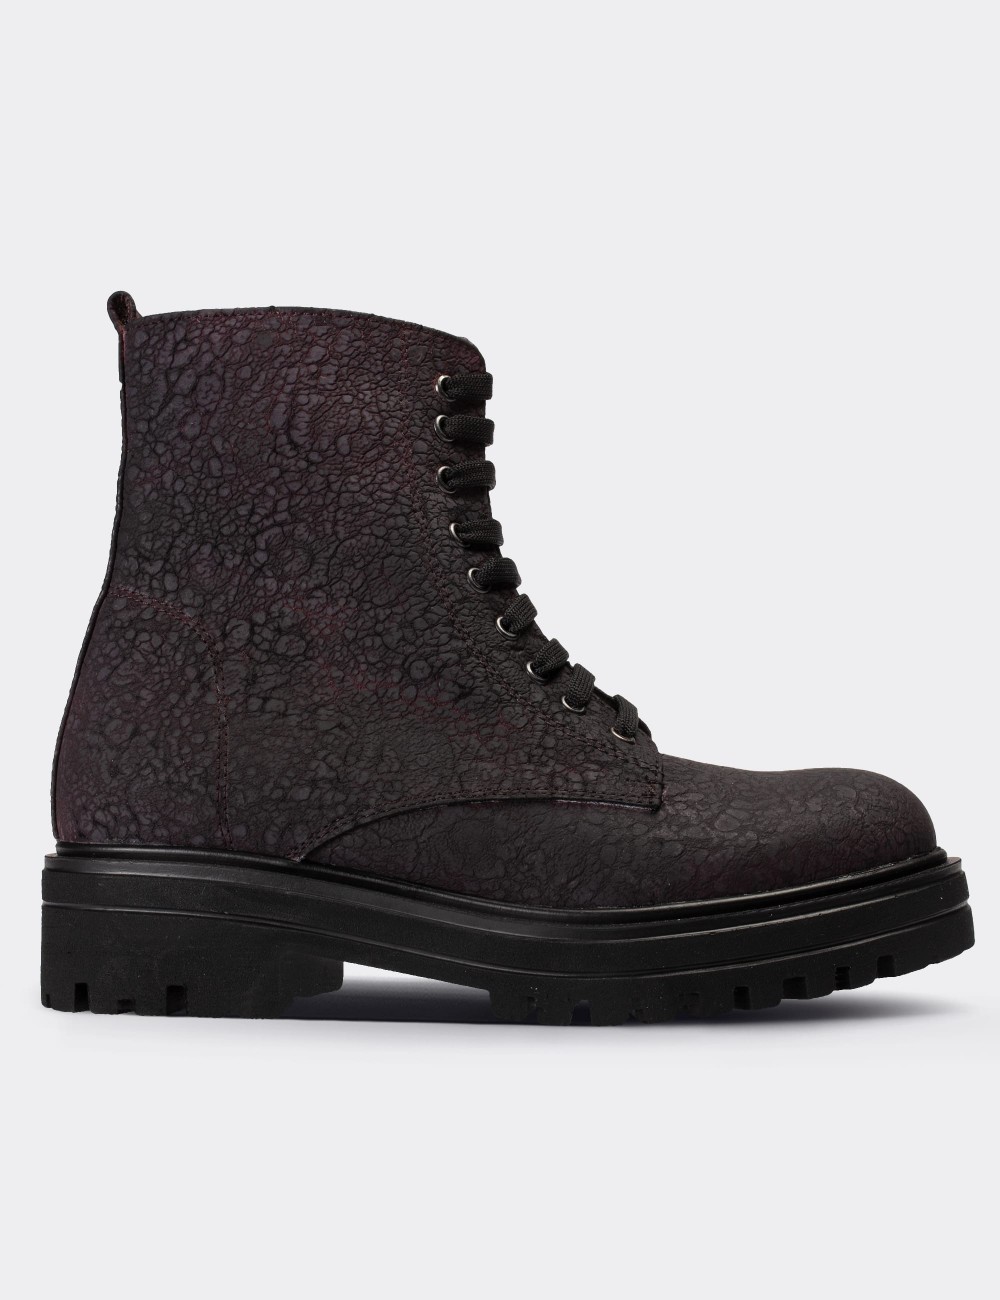 Brown Nubuck Leather Postal Boots - 01814ZKHVE02